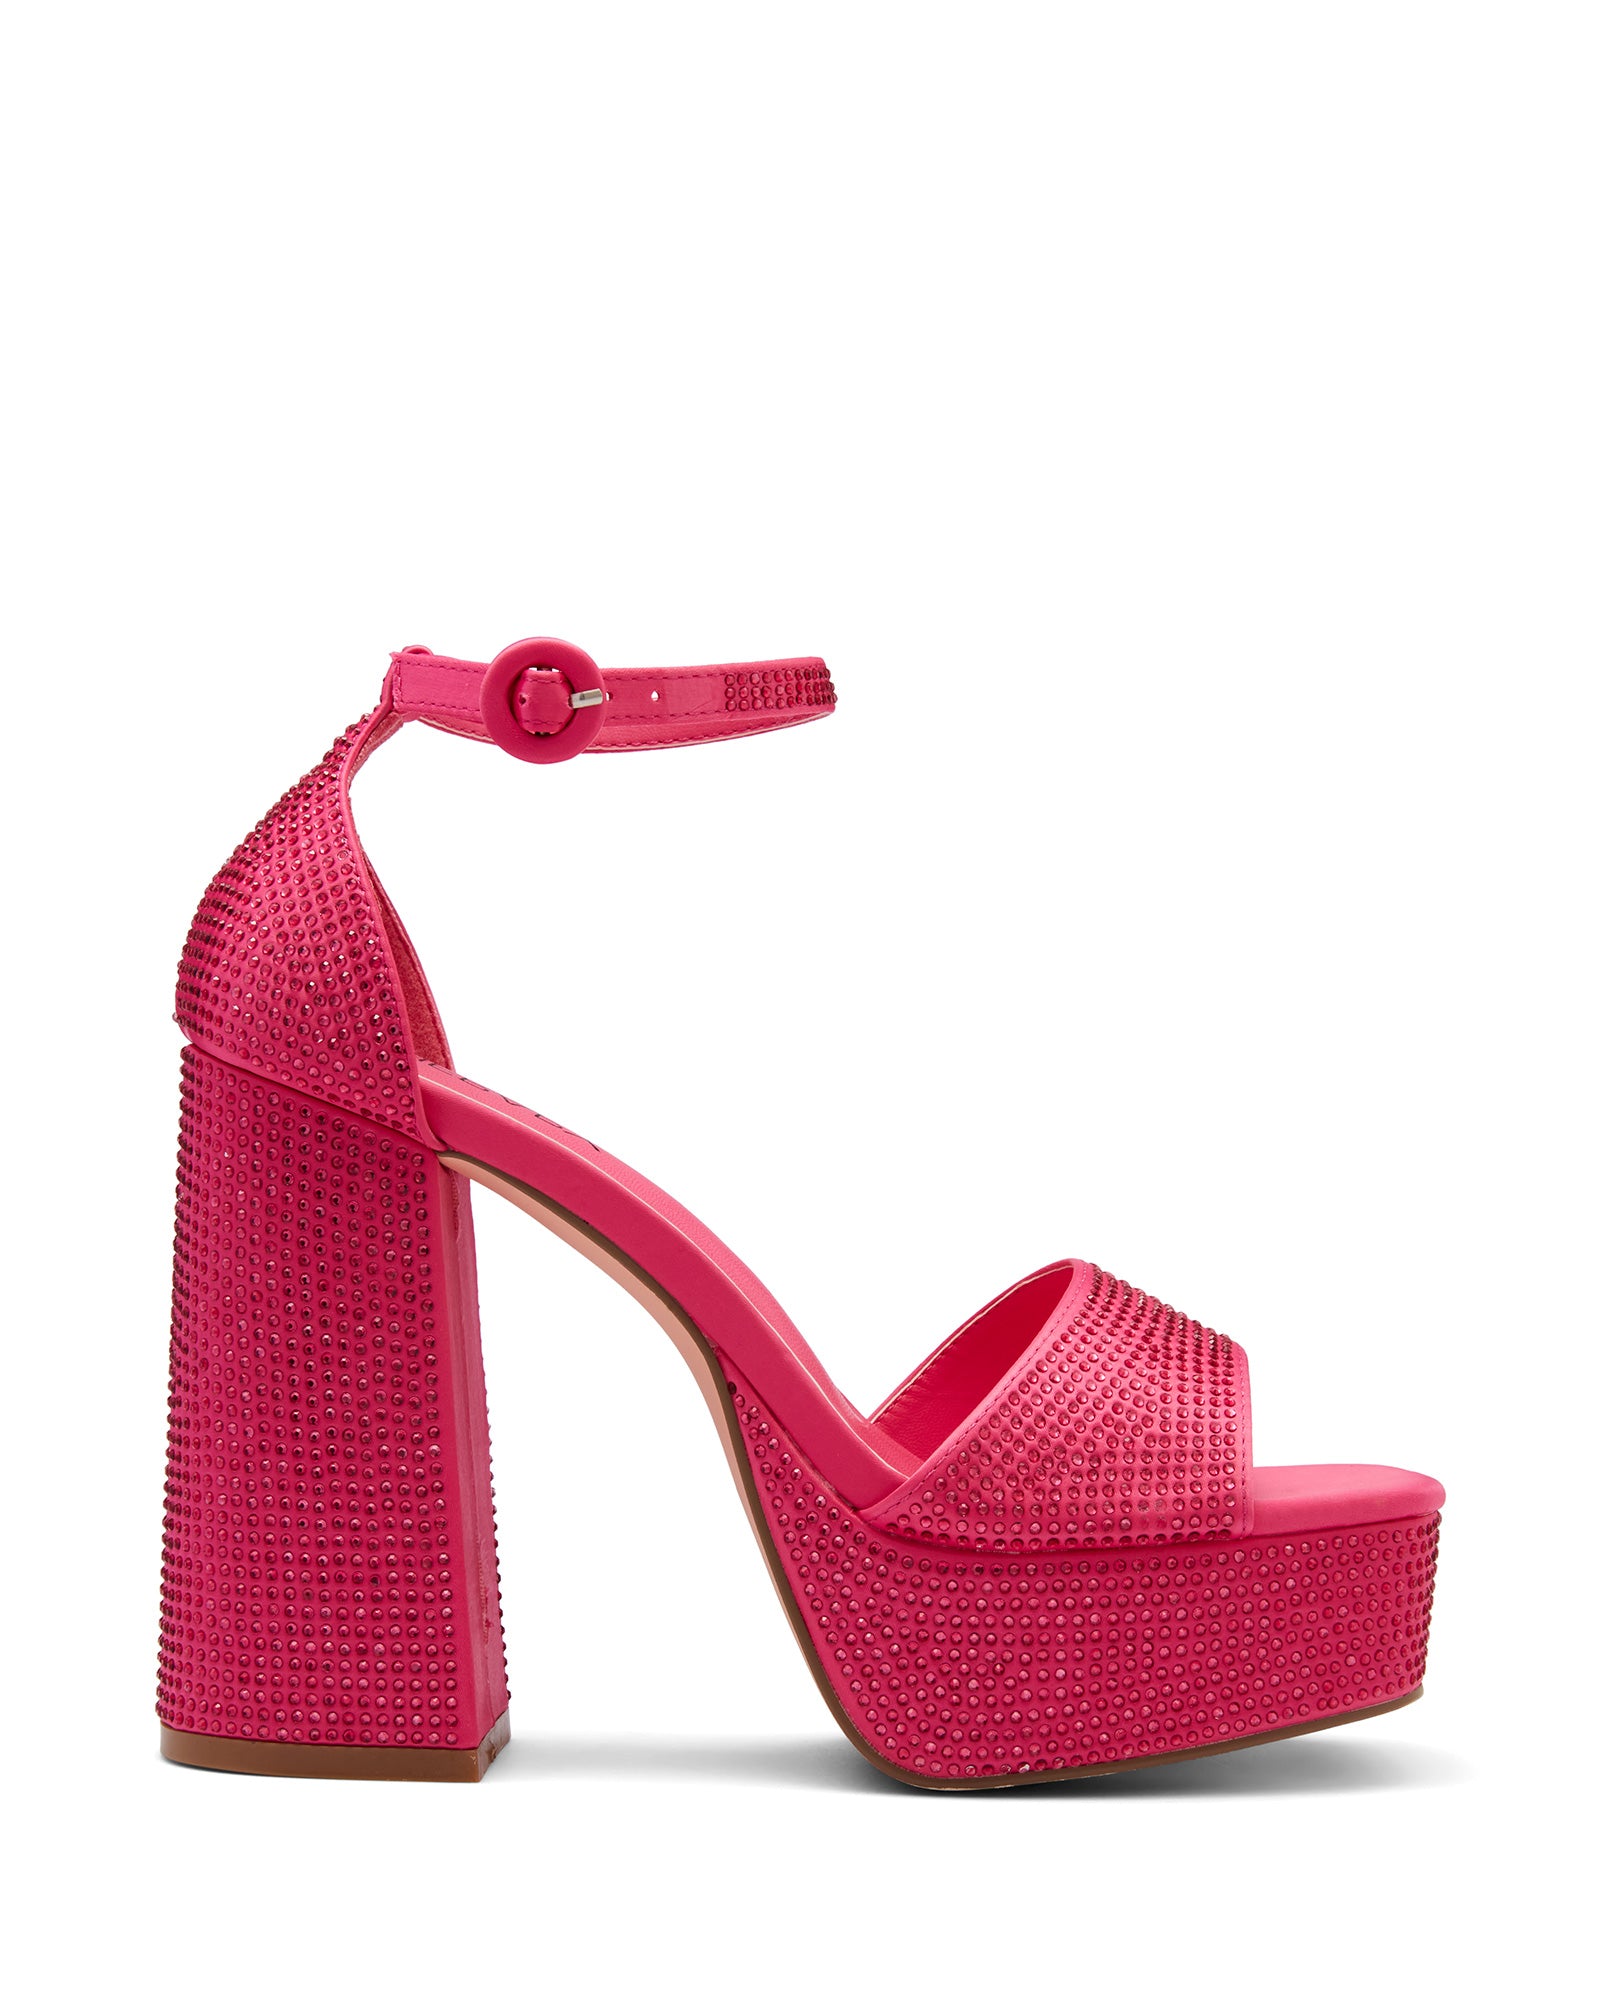 Therapy Shoes Moda Pink Satin | Women's Heels | Sandals | Platform | Rhinestone